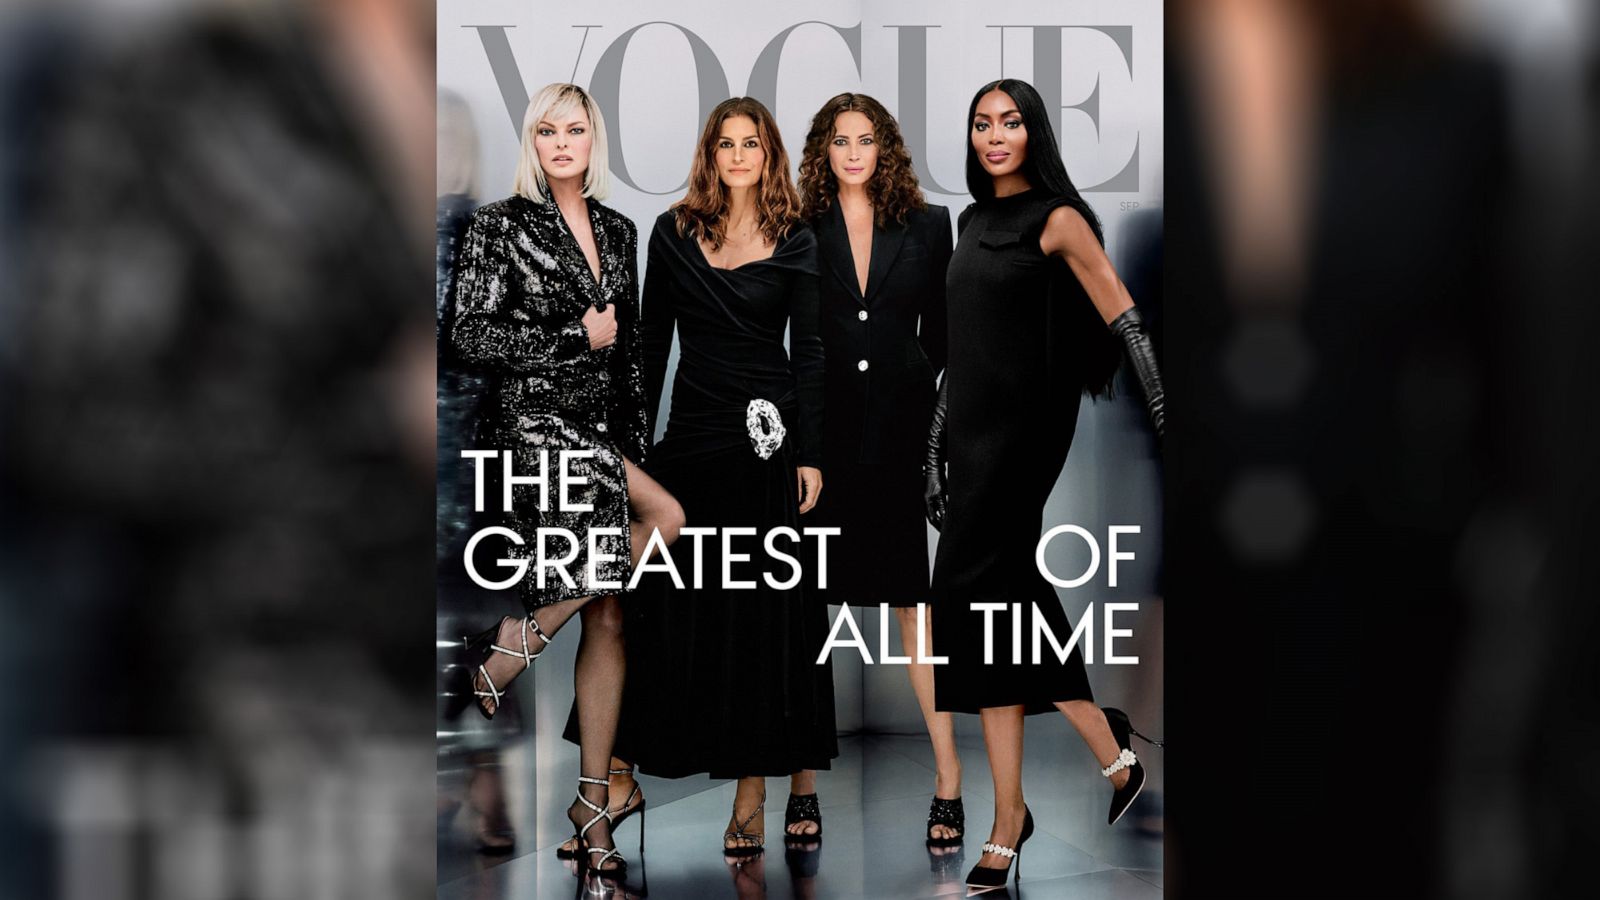 Naomi Campbell, Cindy Crawford, Linda Evangelista, and Christy Turlington  reunite on cover of Vogue - ABC News